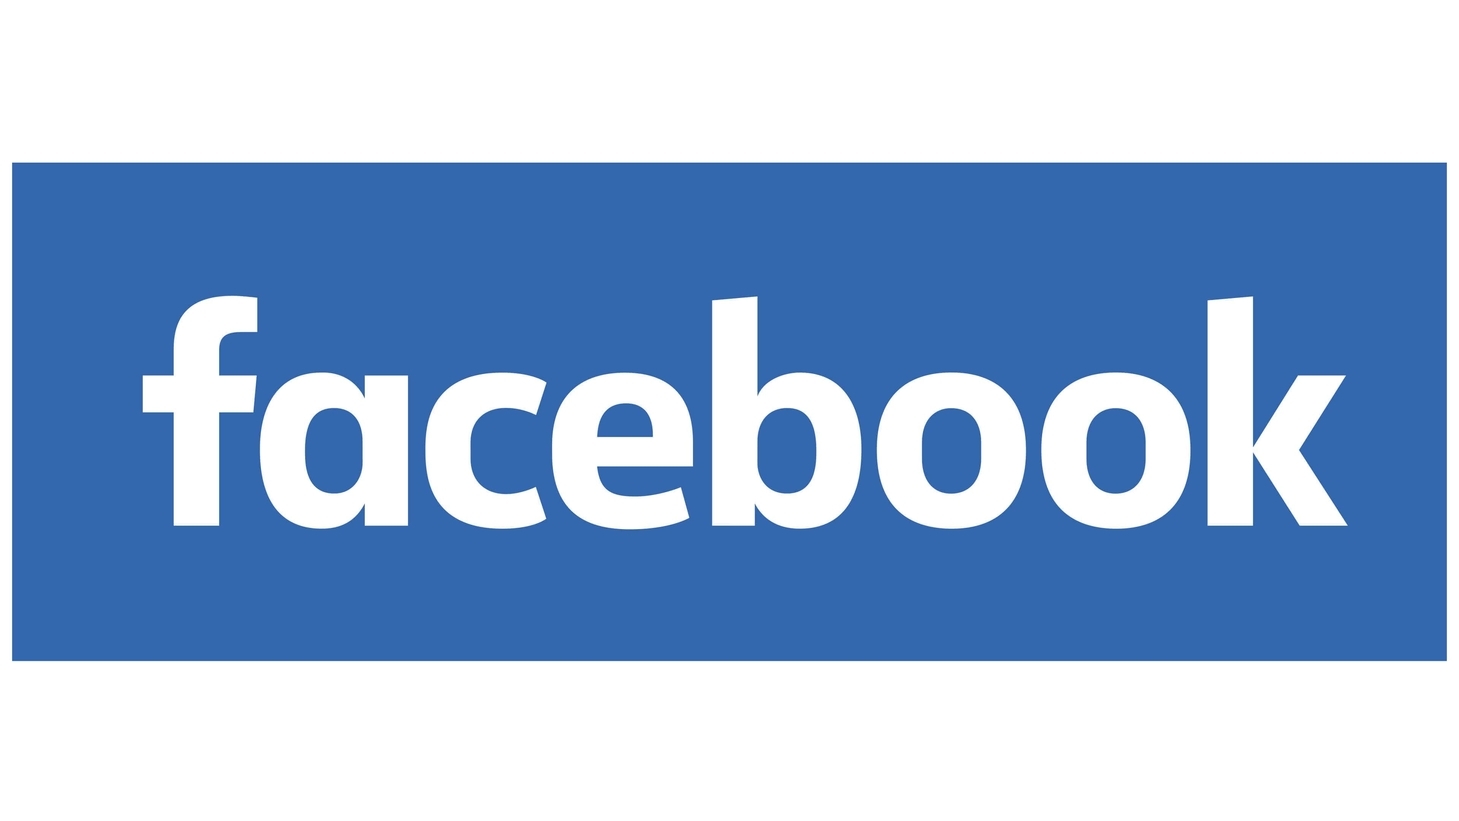 Facebook sign 2015 present